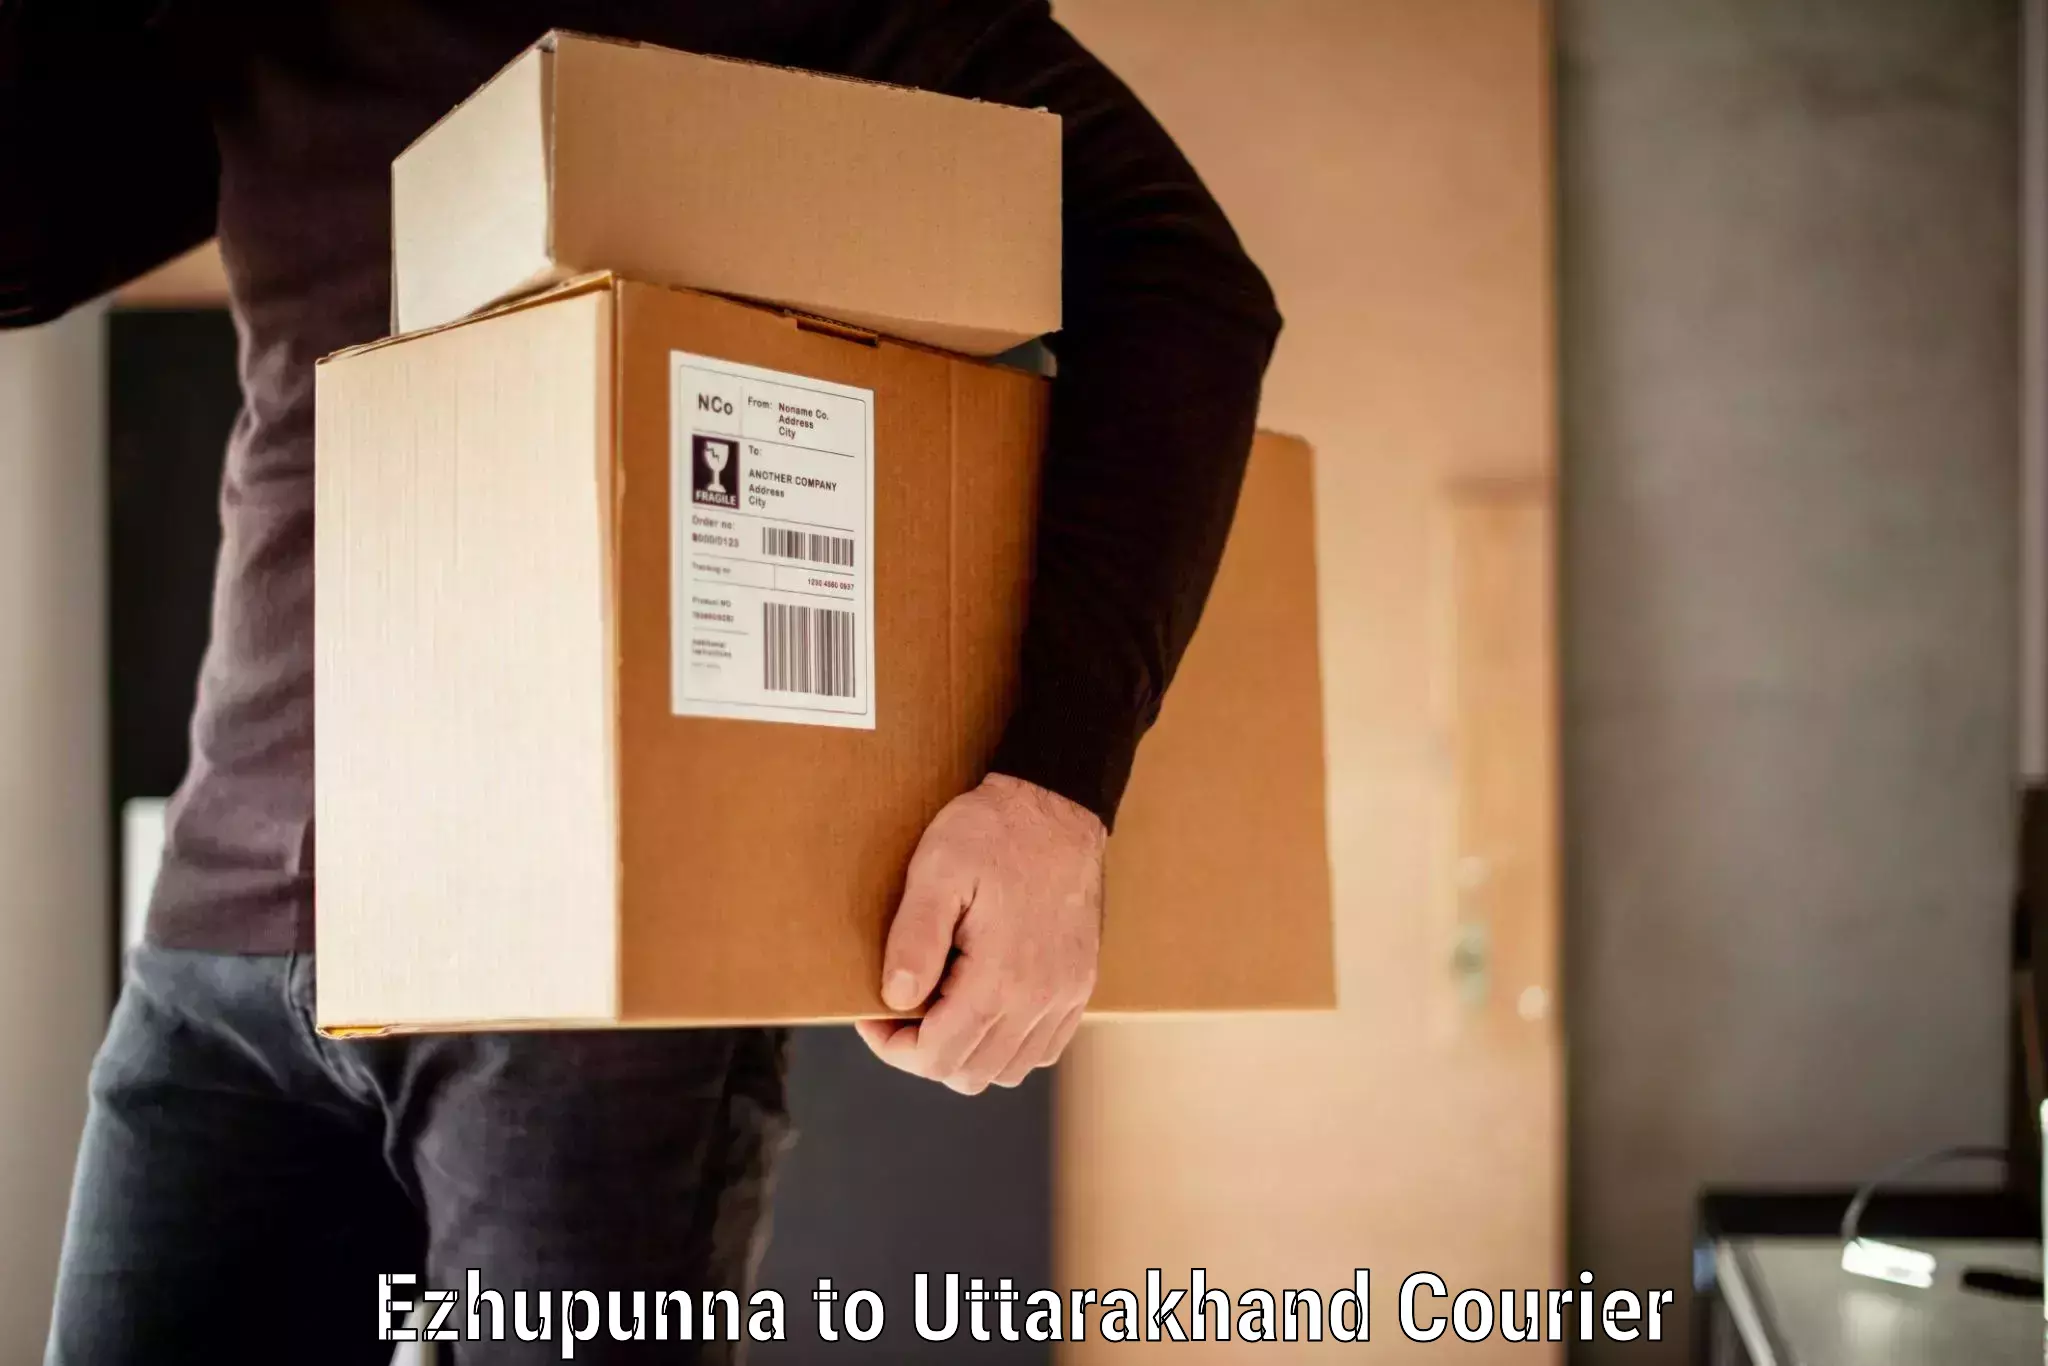 Baggage delivery technology Ezhupunna to Uttarakhand